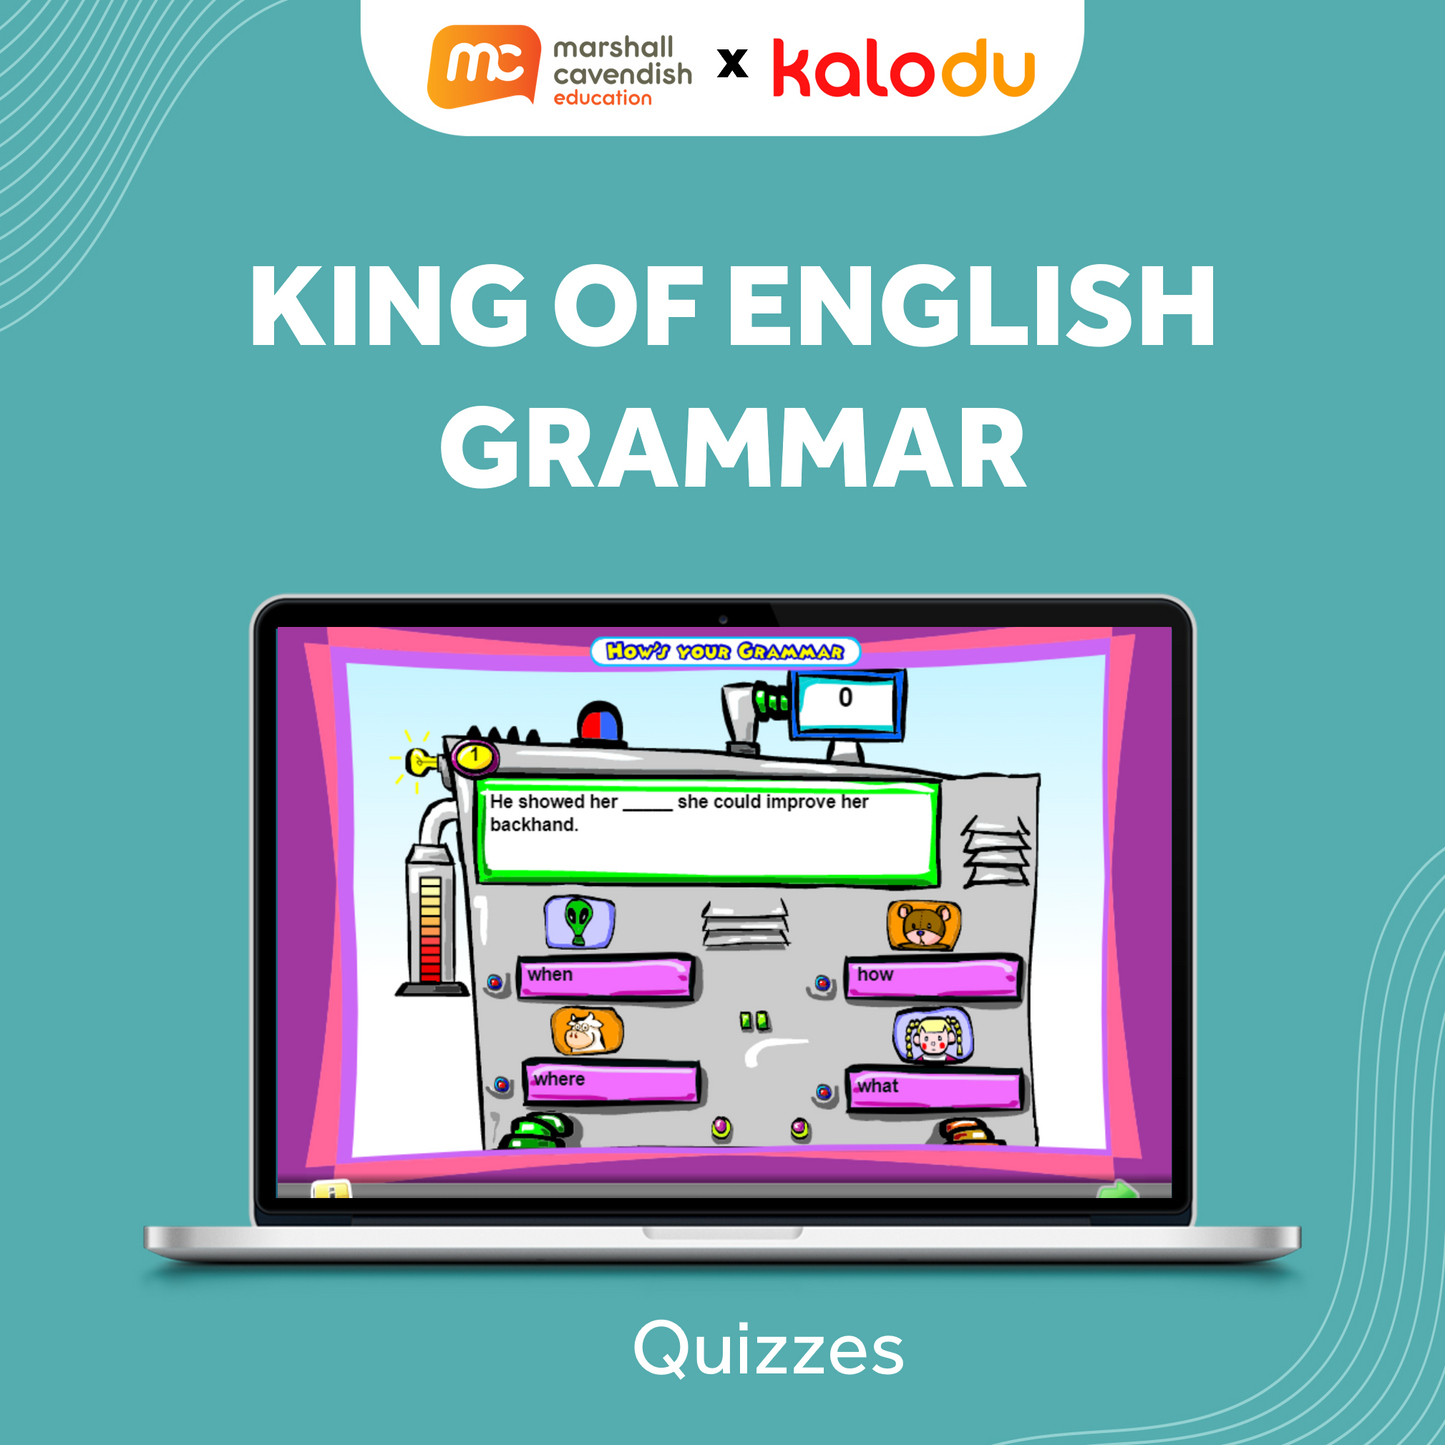 King of English Grammar - Quizzes